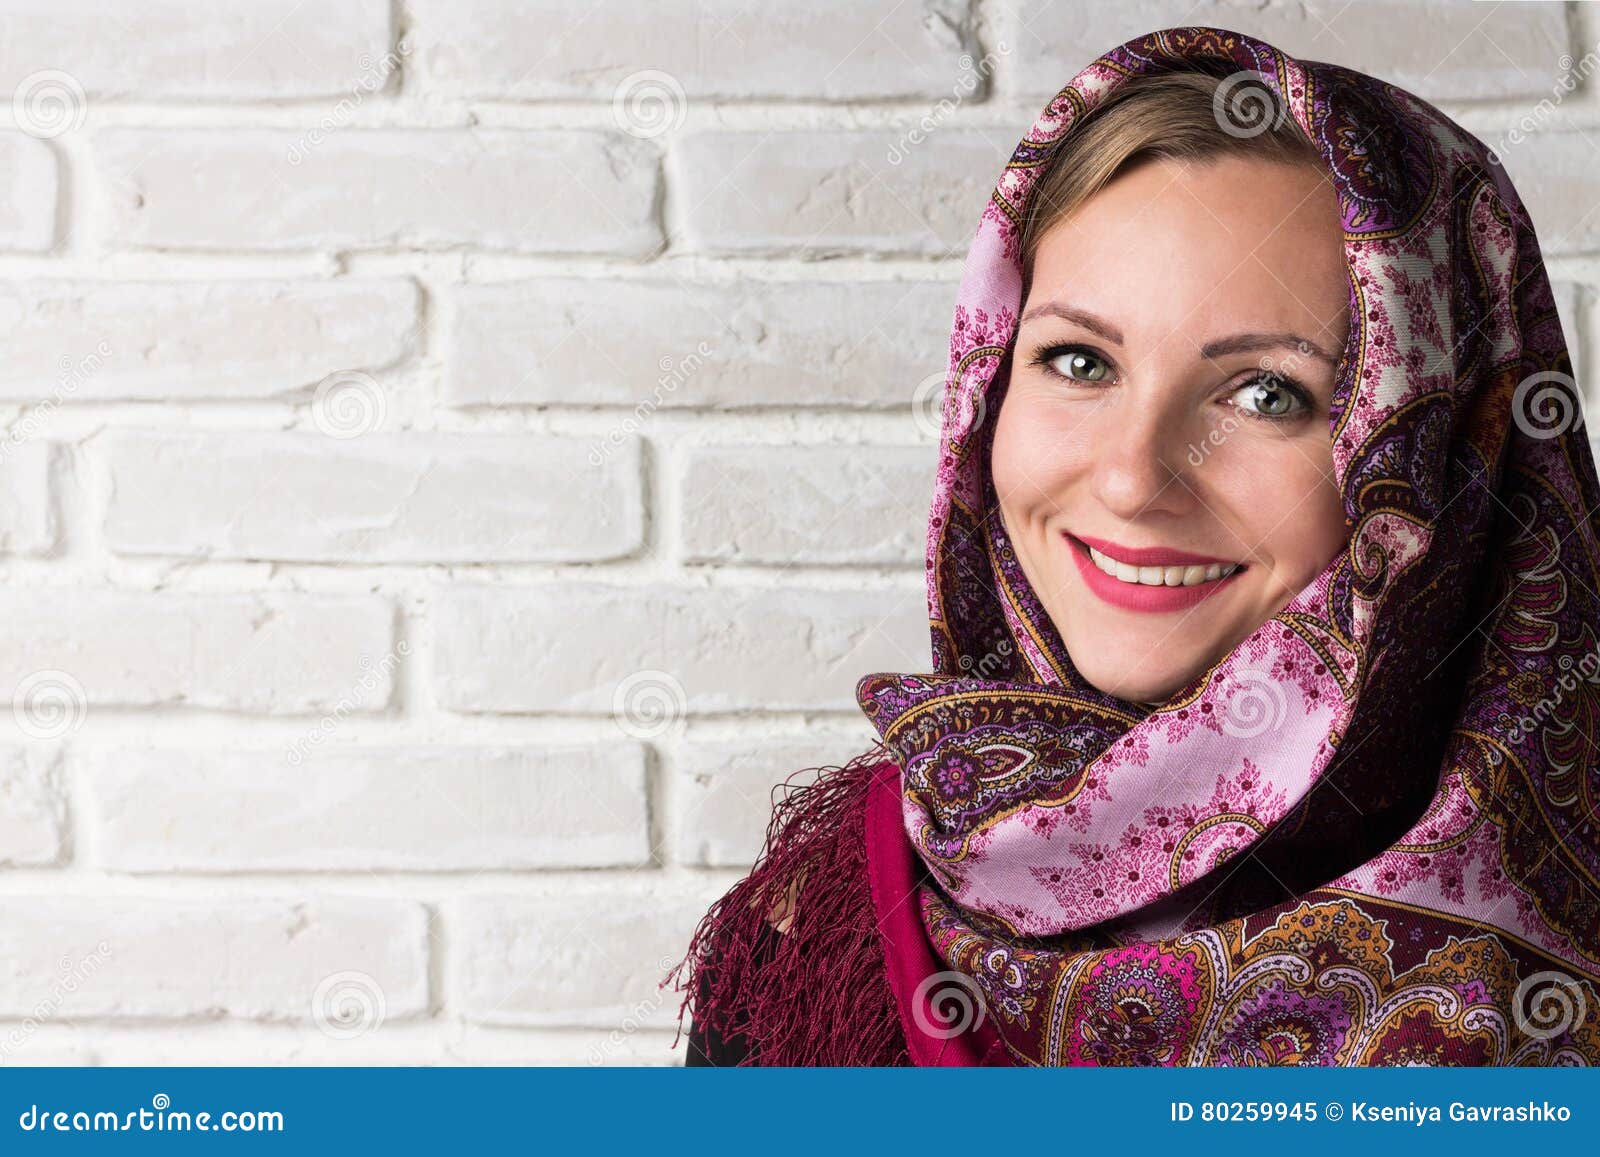 https://thumbs.dreamstime.com/z/portrait-russian-woman-scarf-copy-space-slavic-beauty-national-80259945.jpg